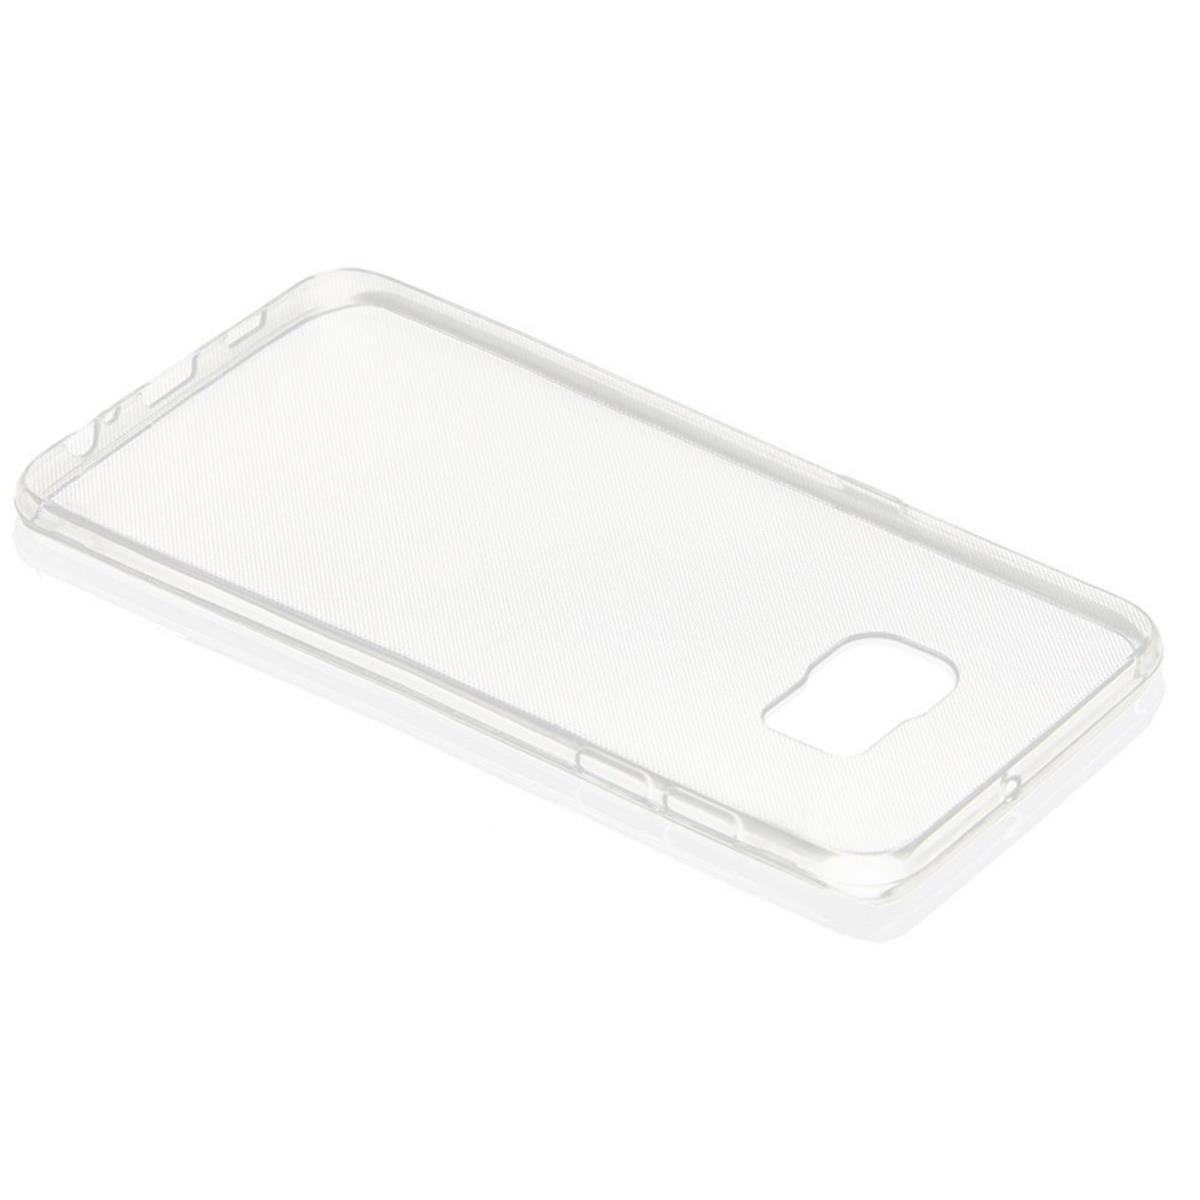 Hülle für Samsung Galaxy S6 Handyhülle Silikon Cover Schutzhülle Case Slim Klar